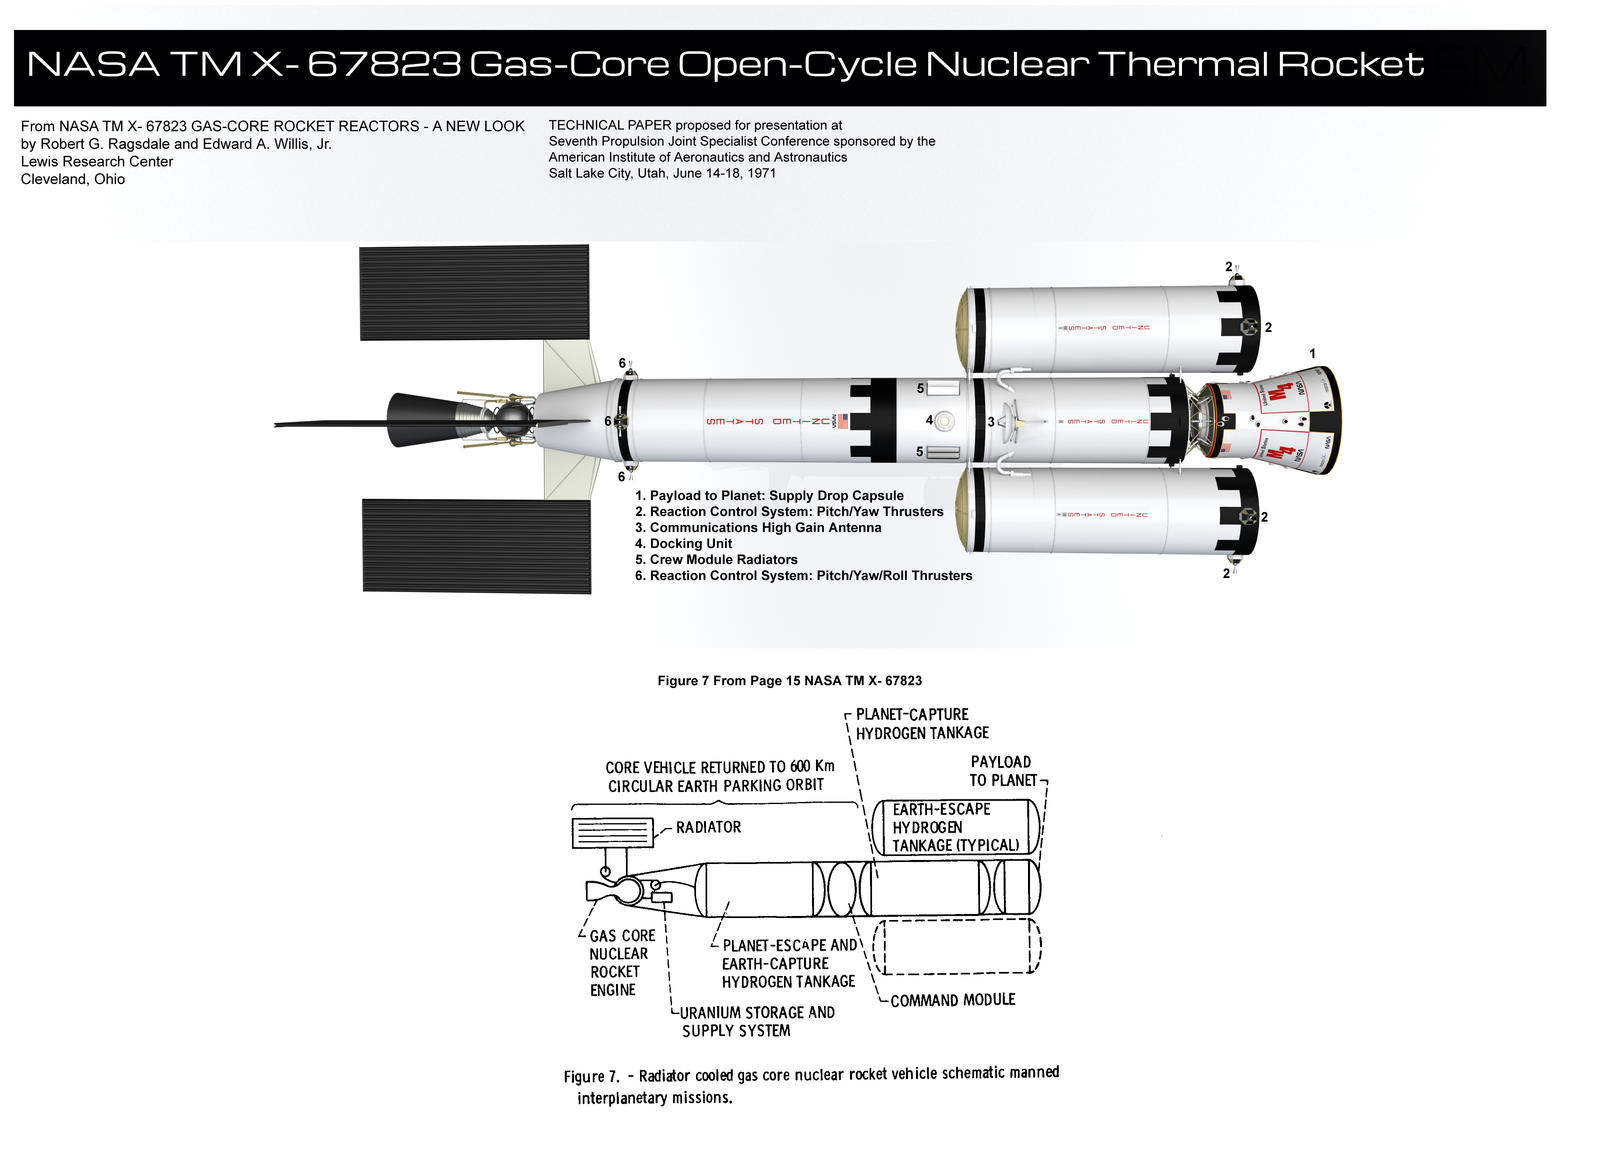 NASA TM X-67823 Gas-Core Rocket Diagram